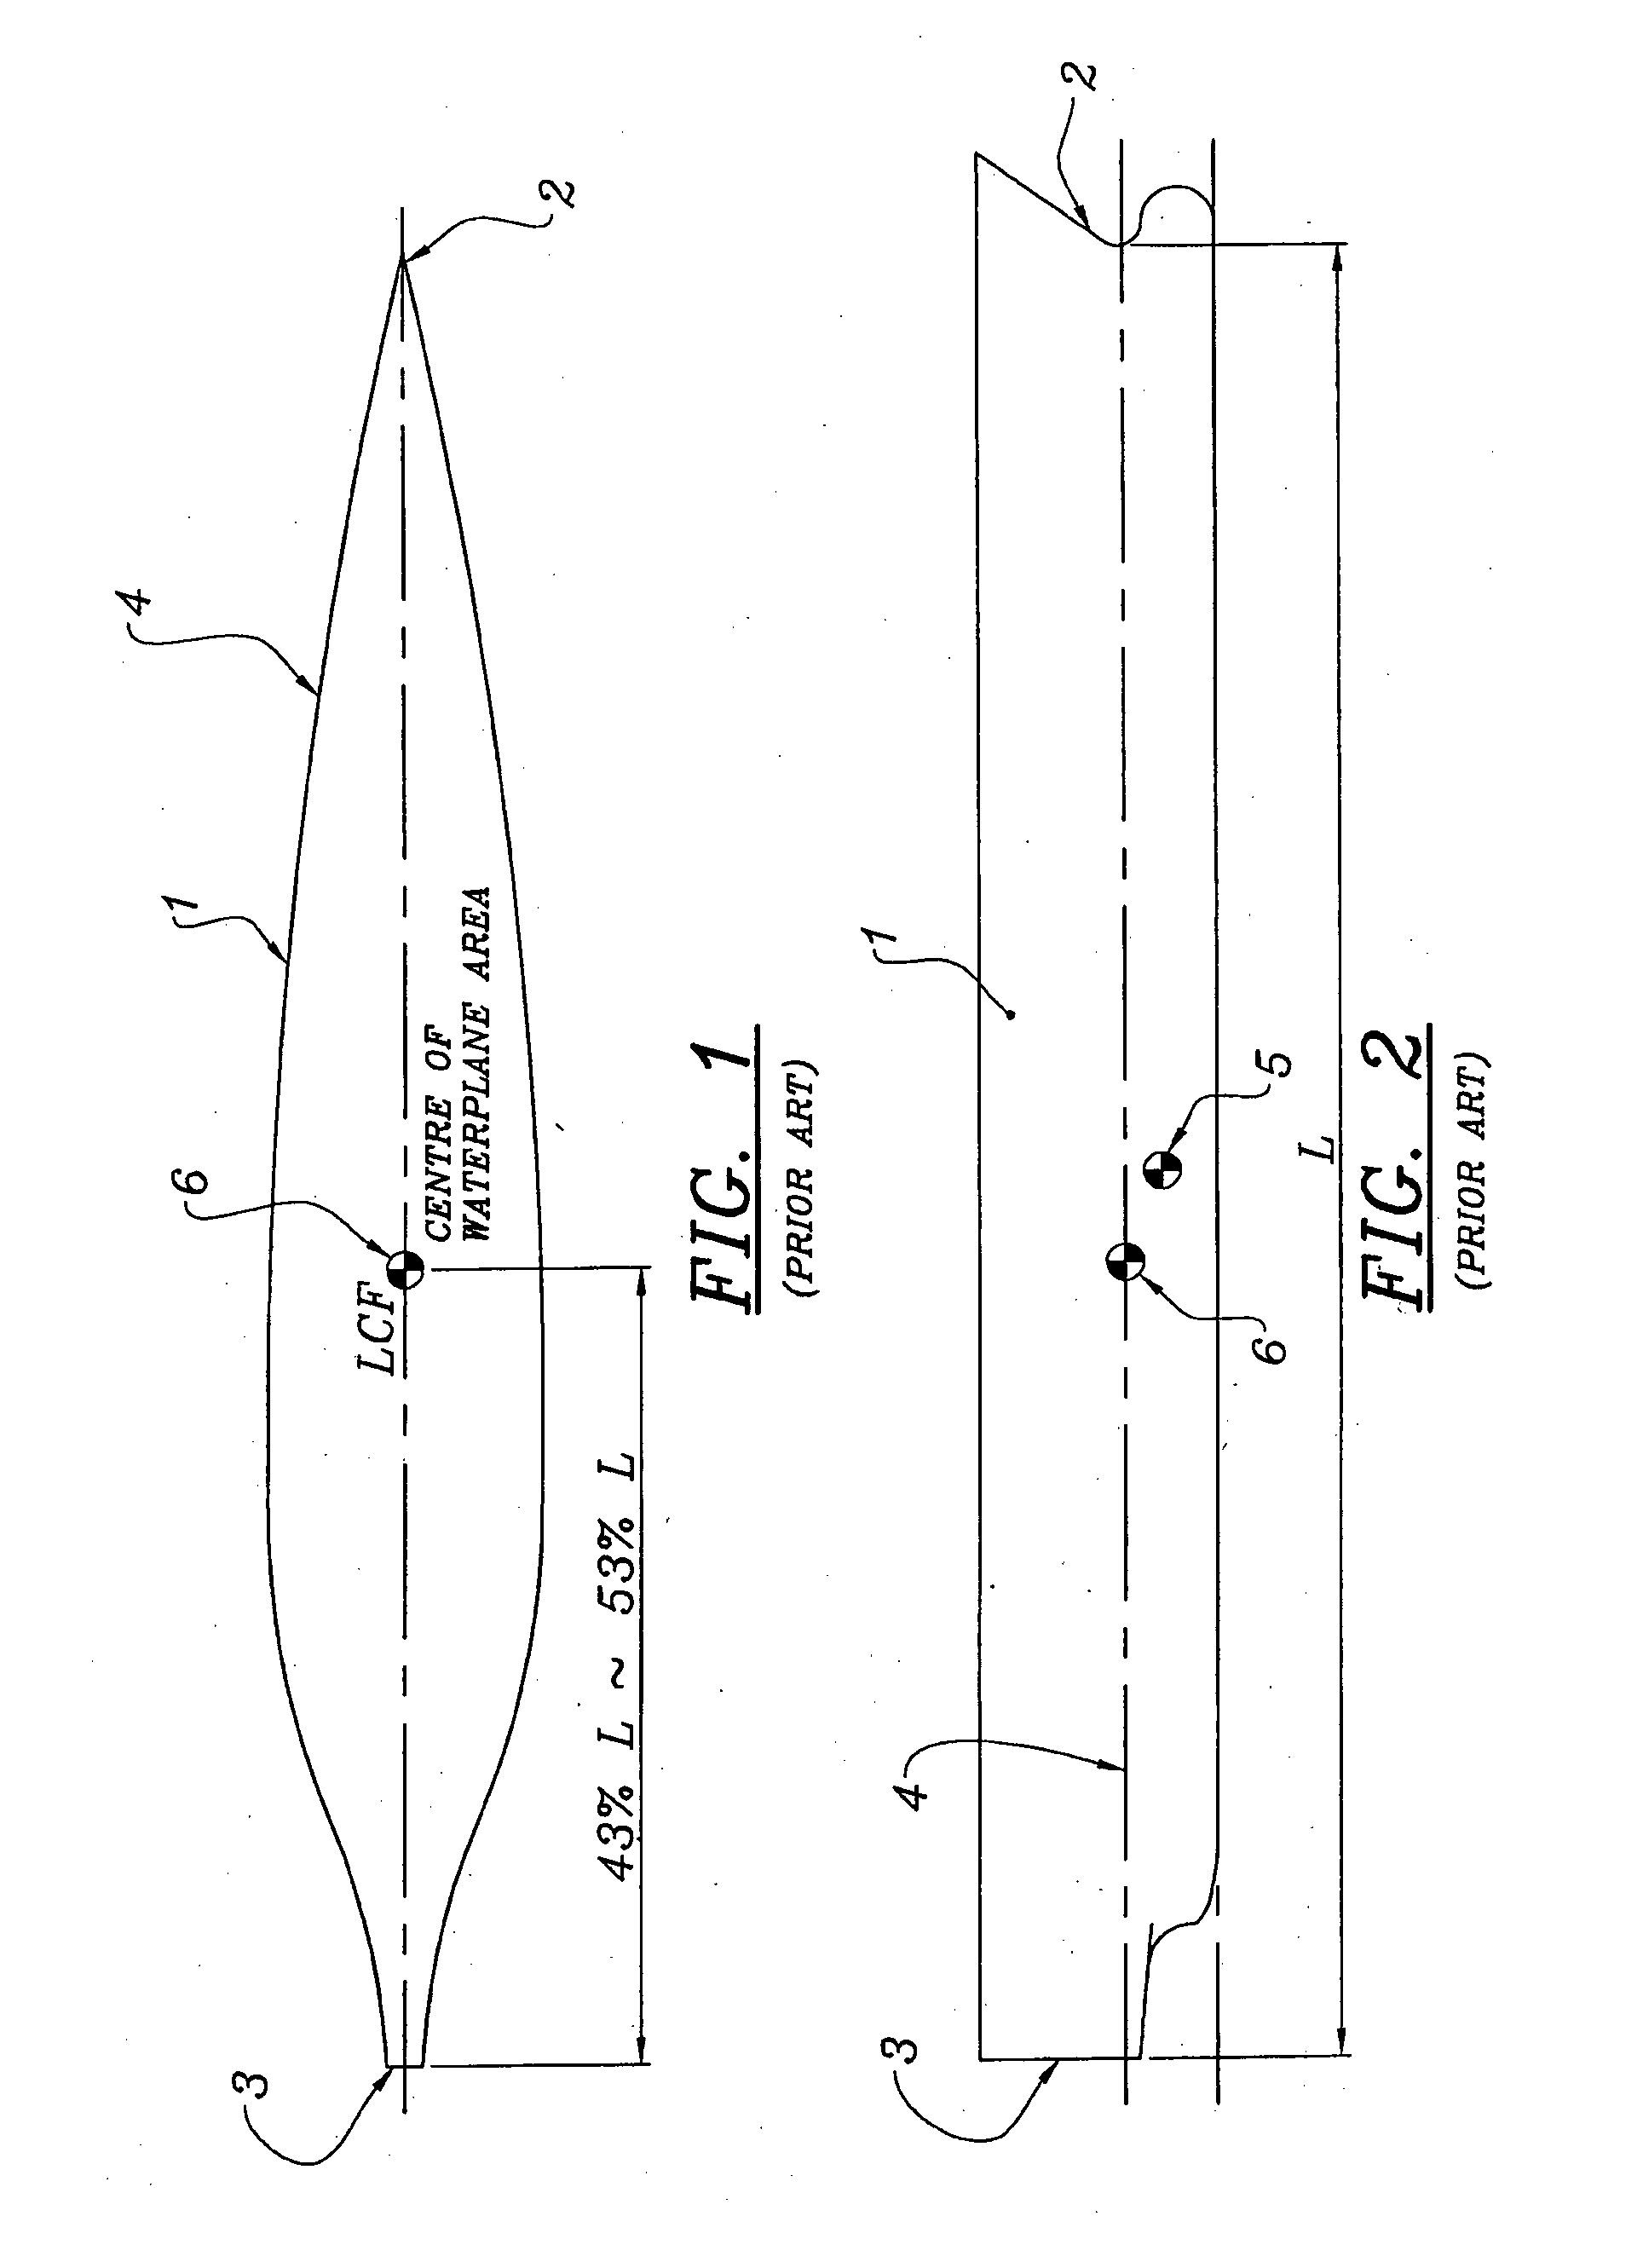 Vessel hull configuration